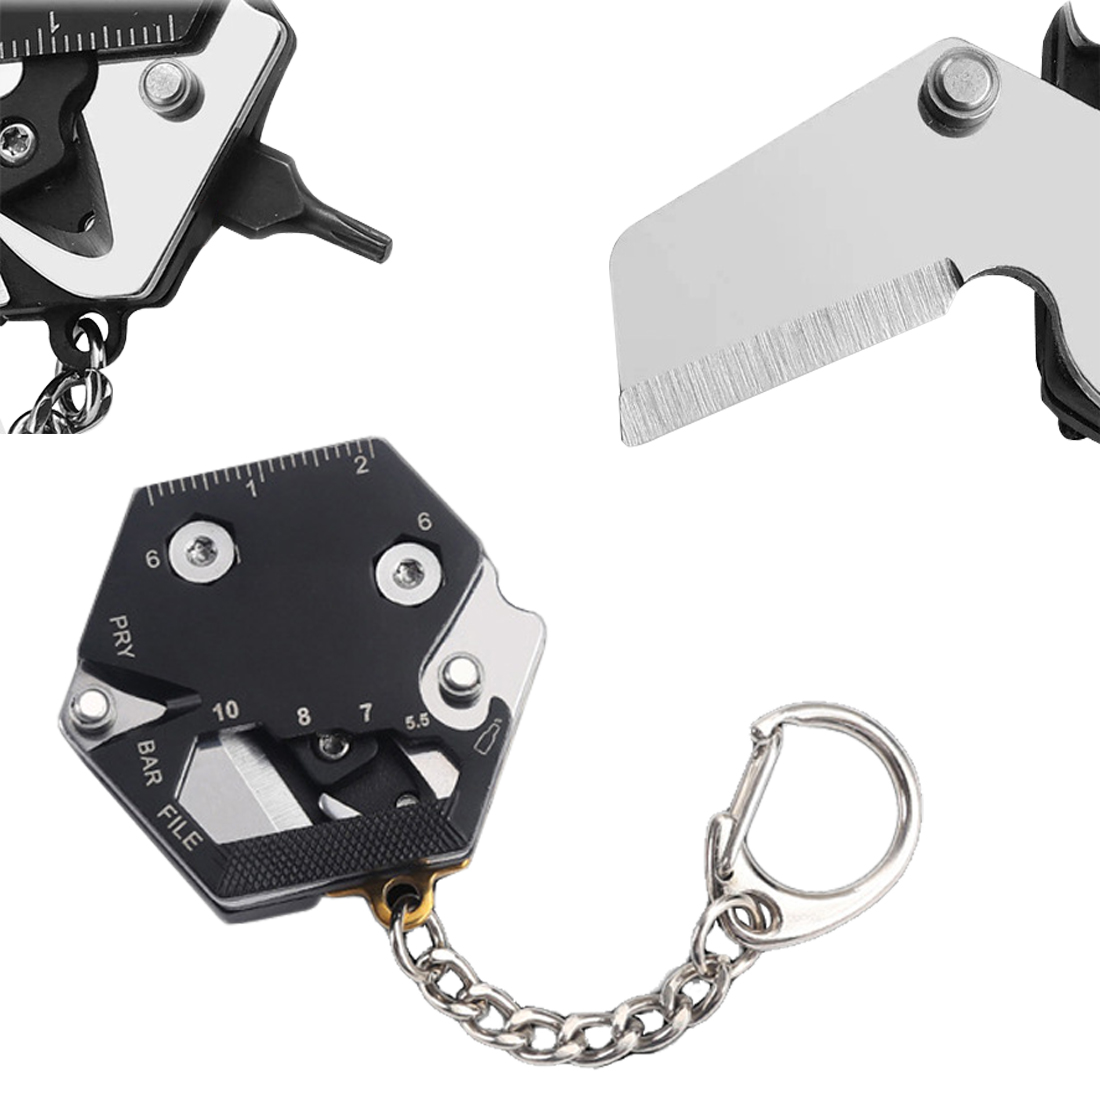 Multitool Keychain Hexagonal Kit Folding Mini Pocket Survival Tool Set Stainless Steel with Knife Micro Screw Driver Set Bottle